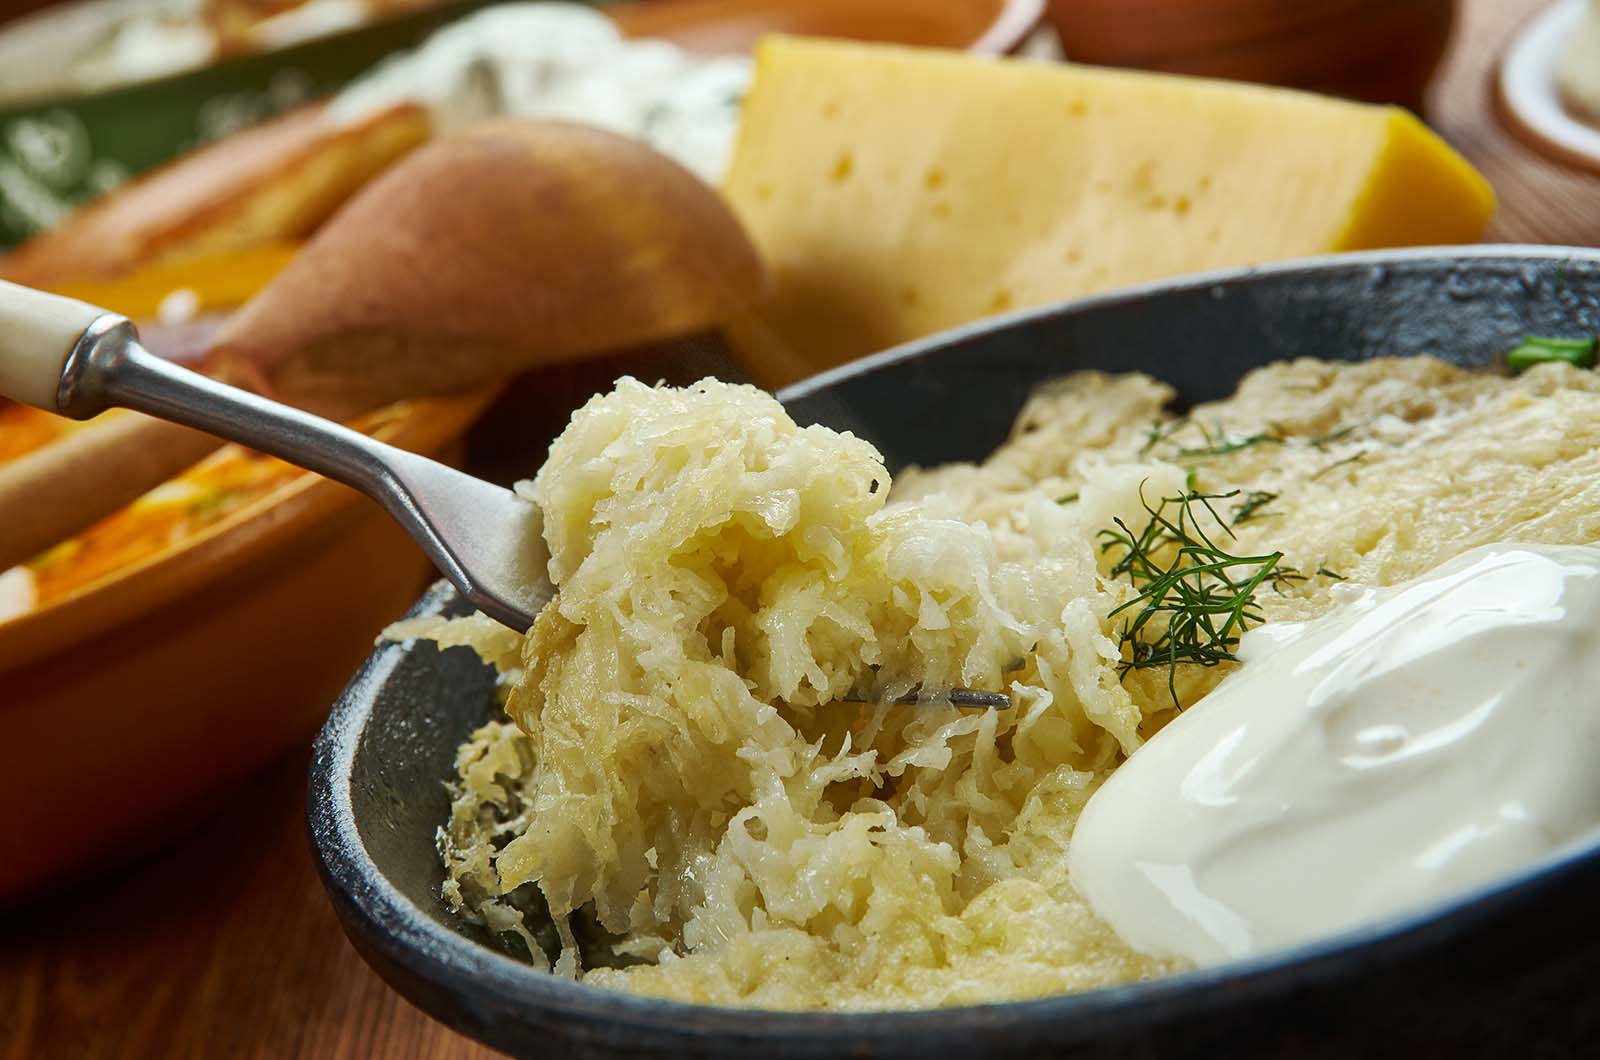 Kugelis - a national dish of Lithuania